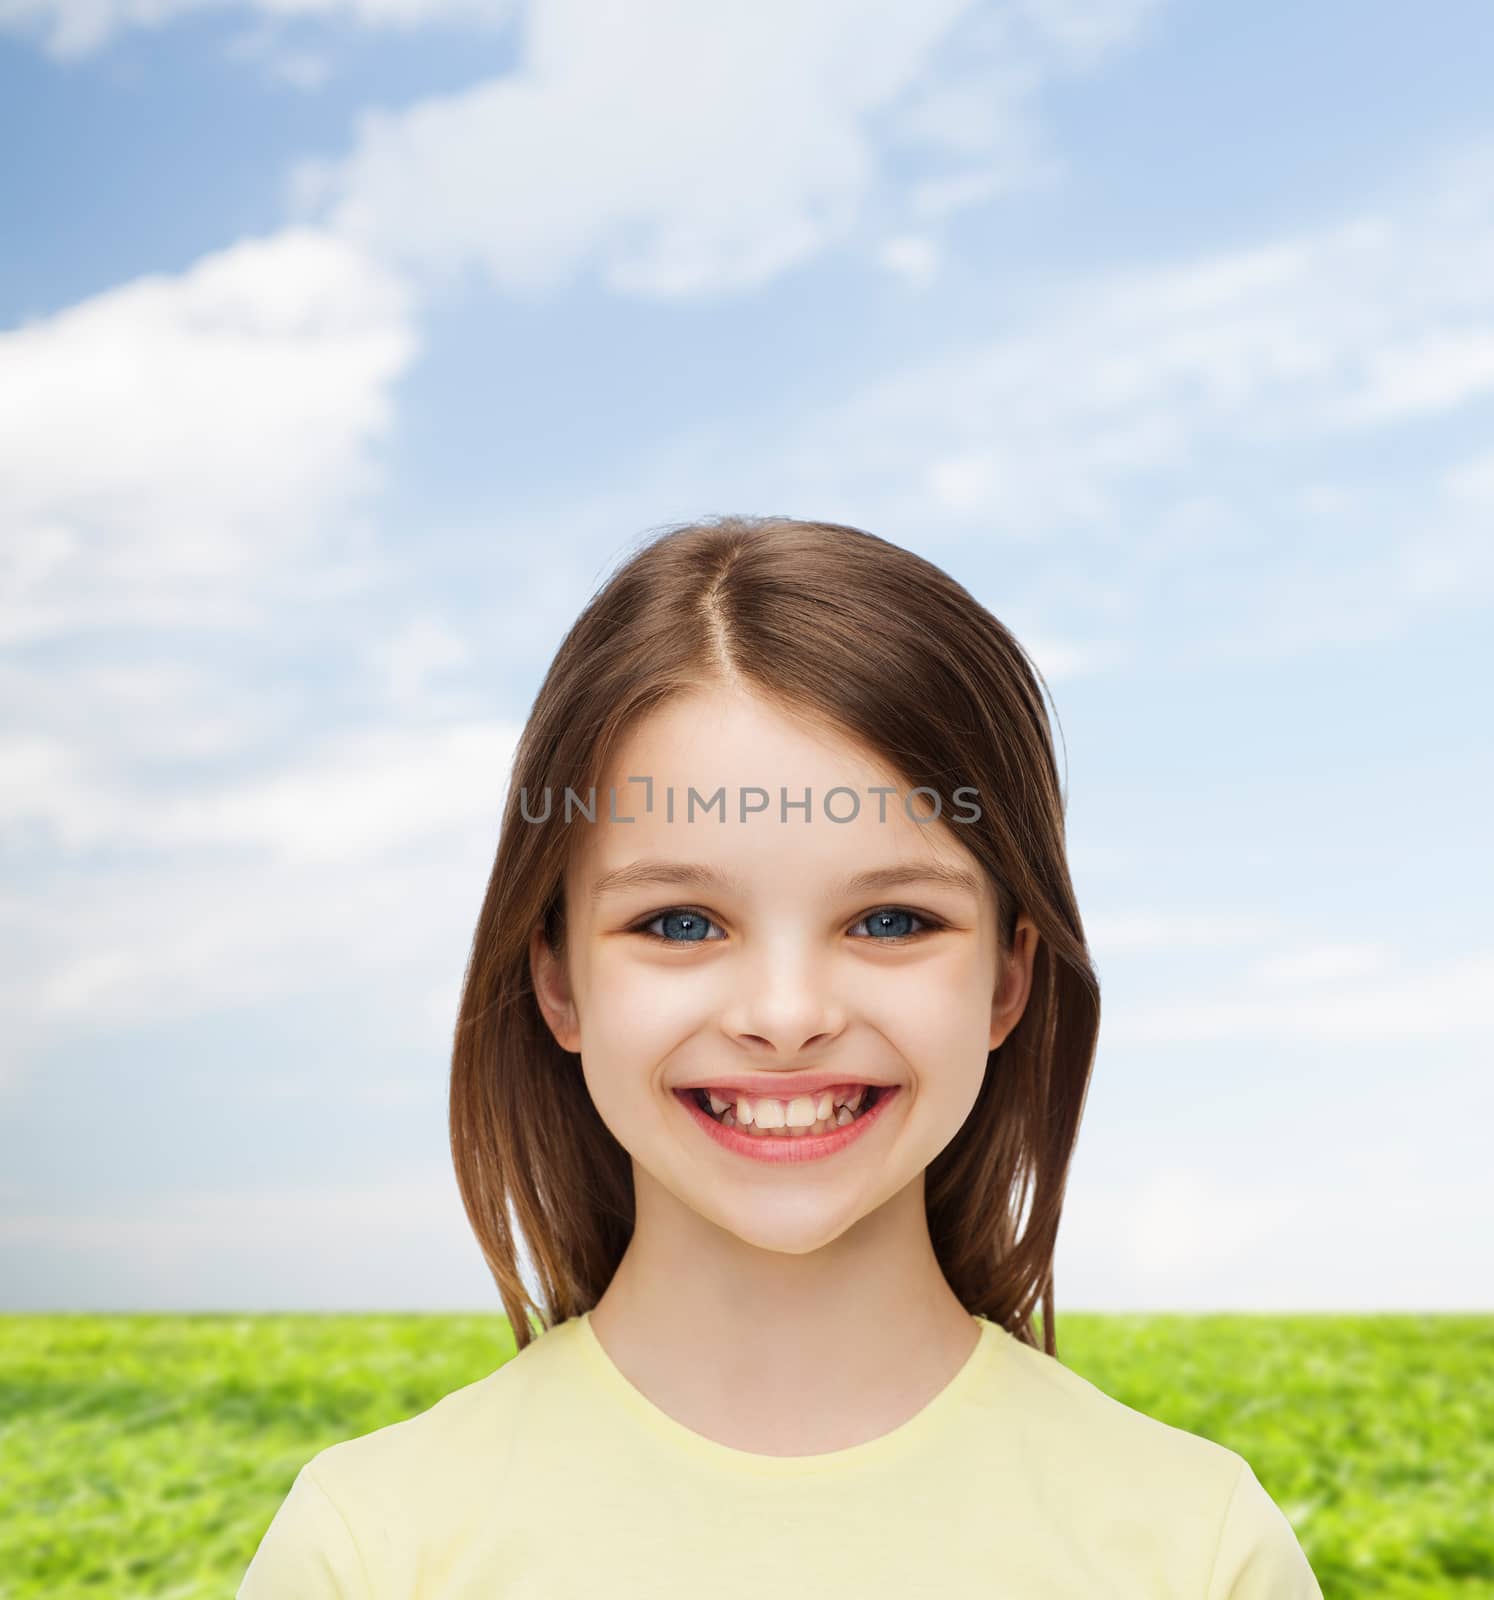 smiling little girl over white background by dolgachov